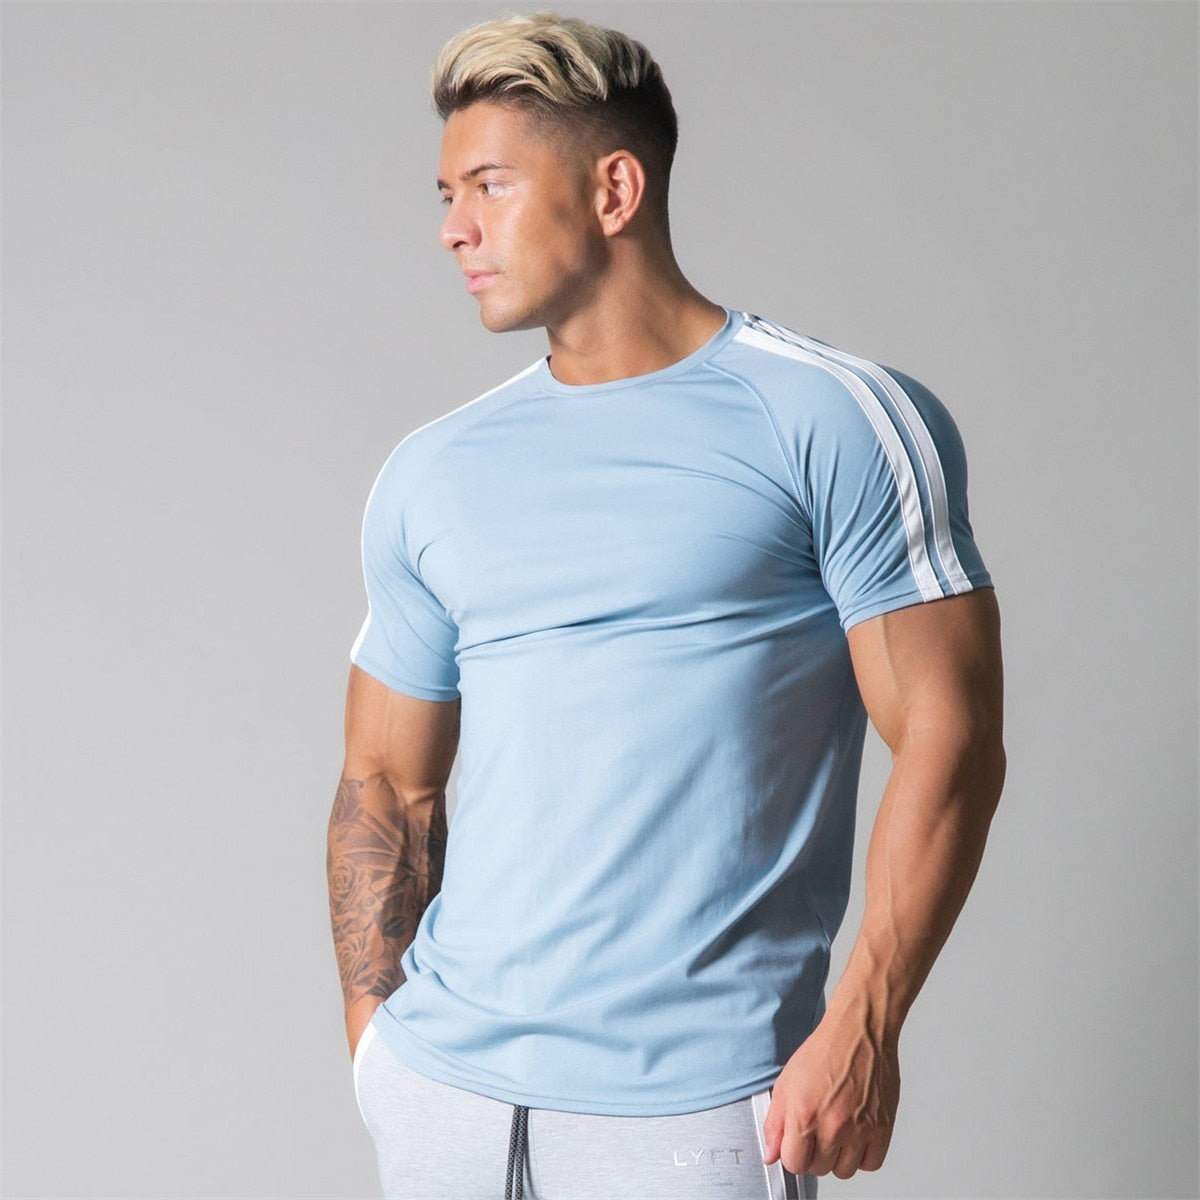 Men Gym Fitness Shirt Light blue